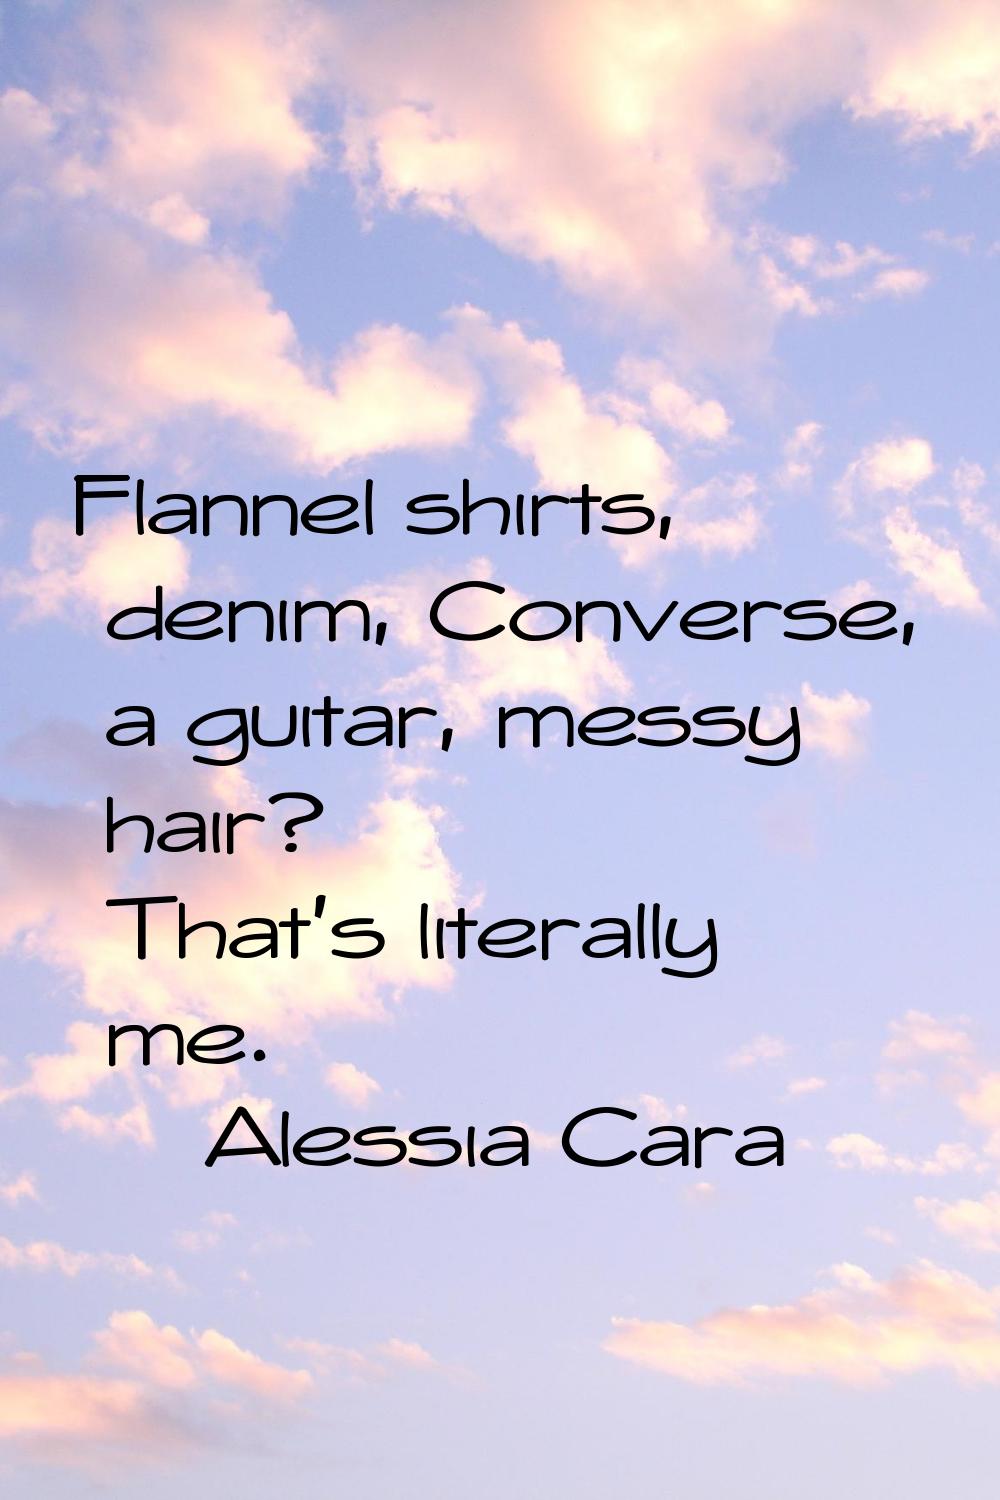 Flannel shirts, denim, Converse, a guitar, messy hair? That's literally me.